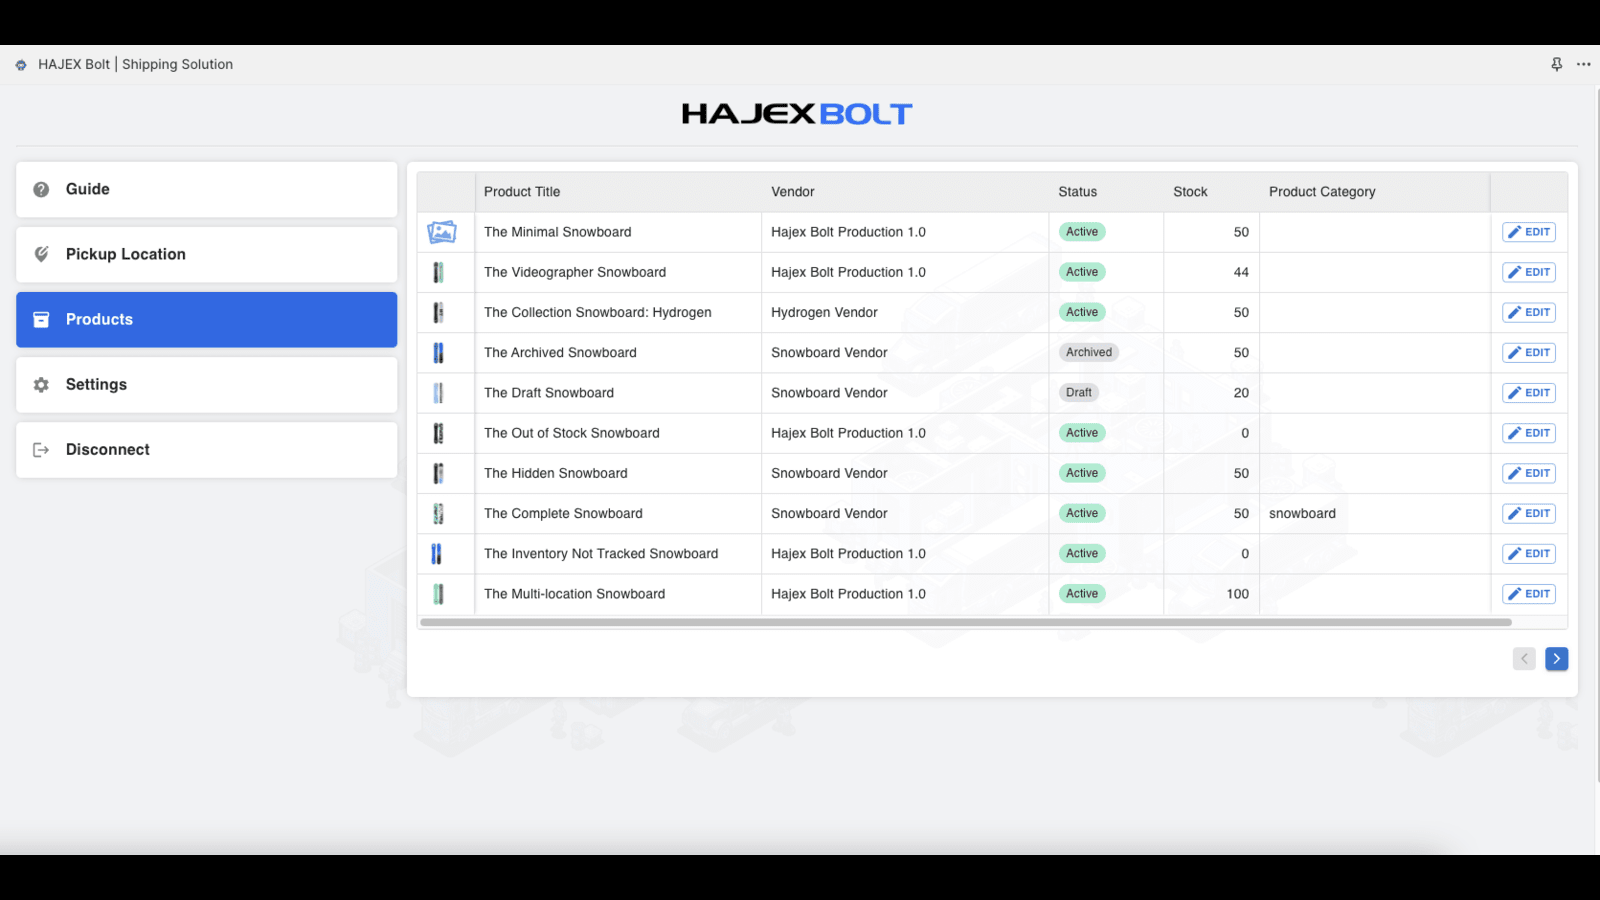 Lista de produtos dentro do App HajexBolt